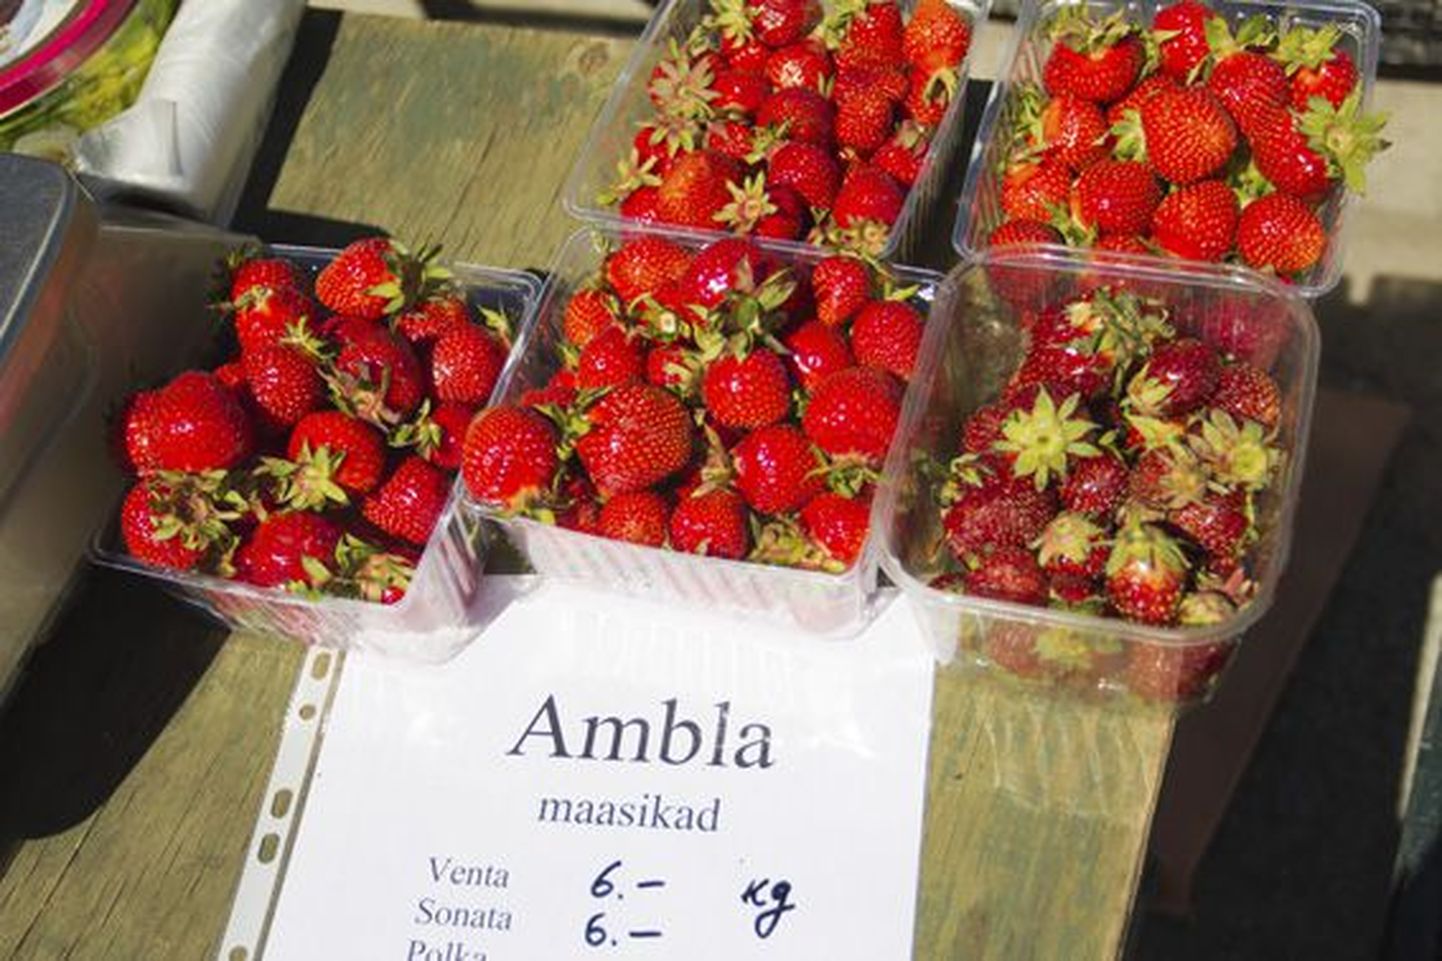 Eesti maasikas on turul välismaisest kallim.